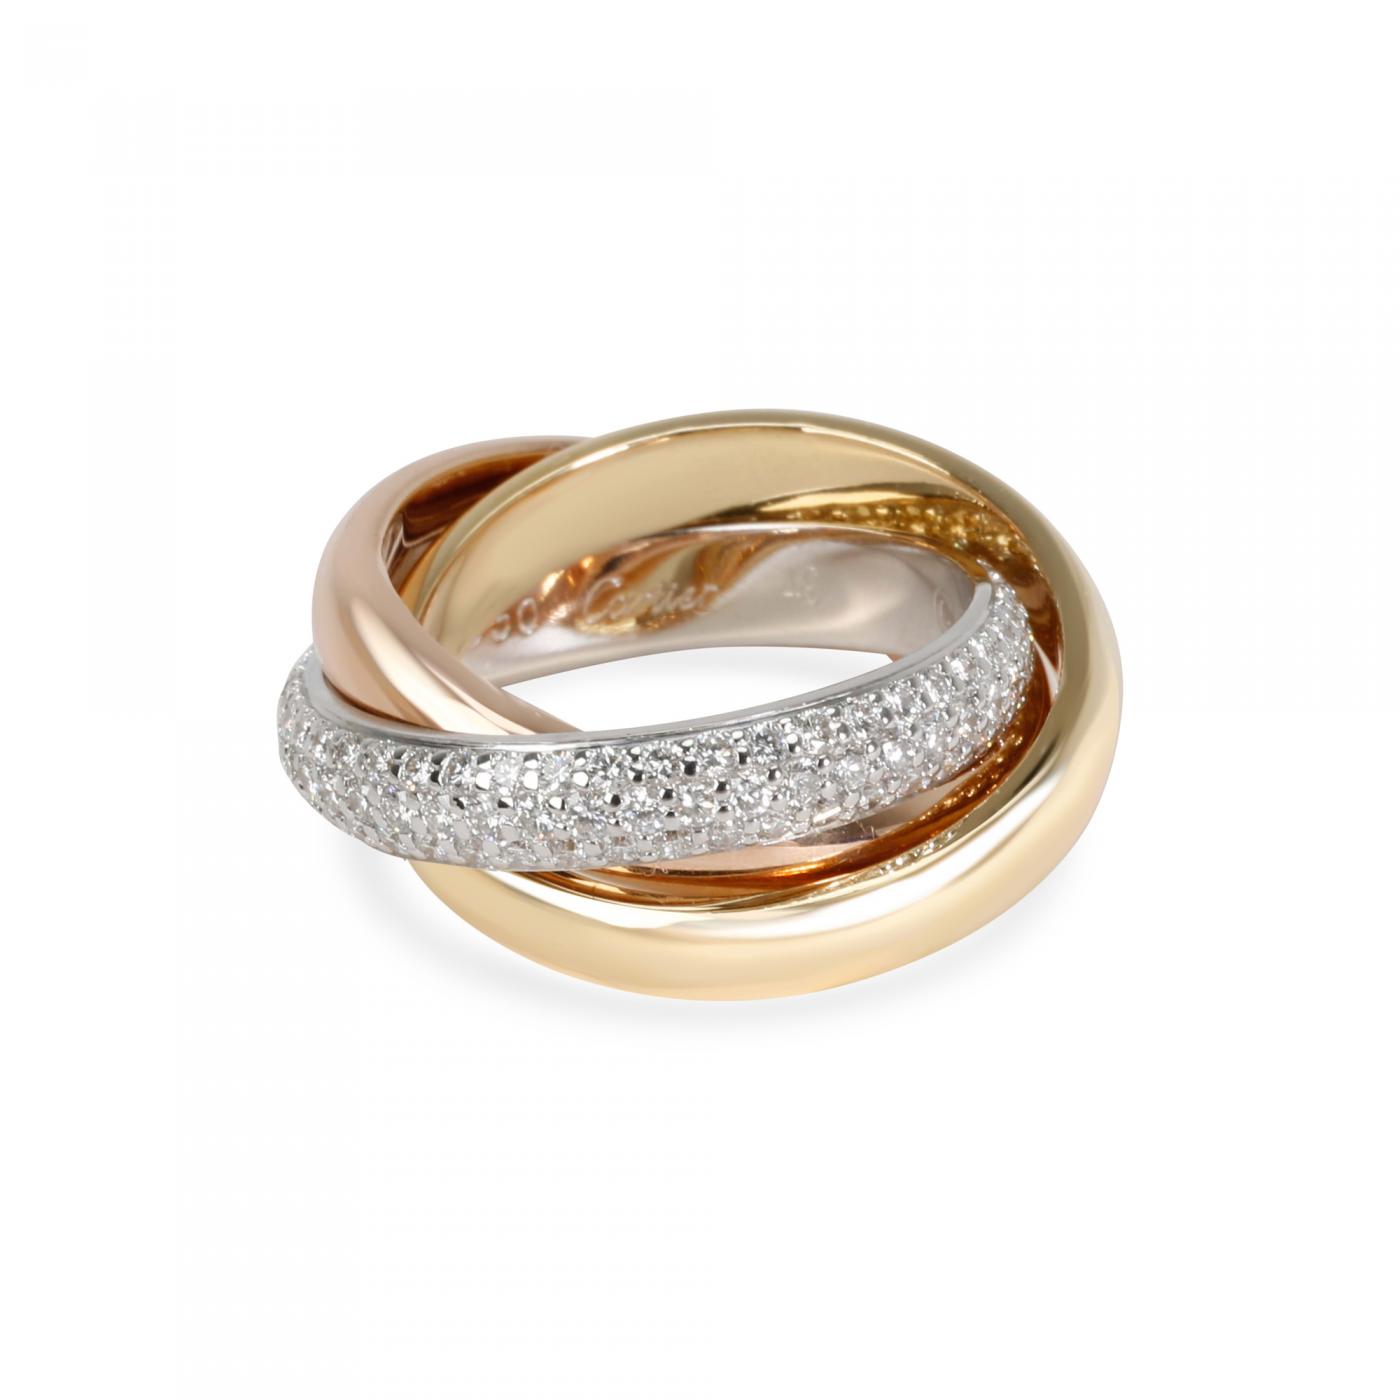 Cartier Trinity Classic Diamond Ring in 